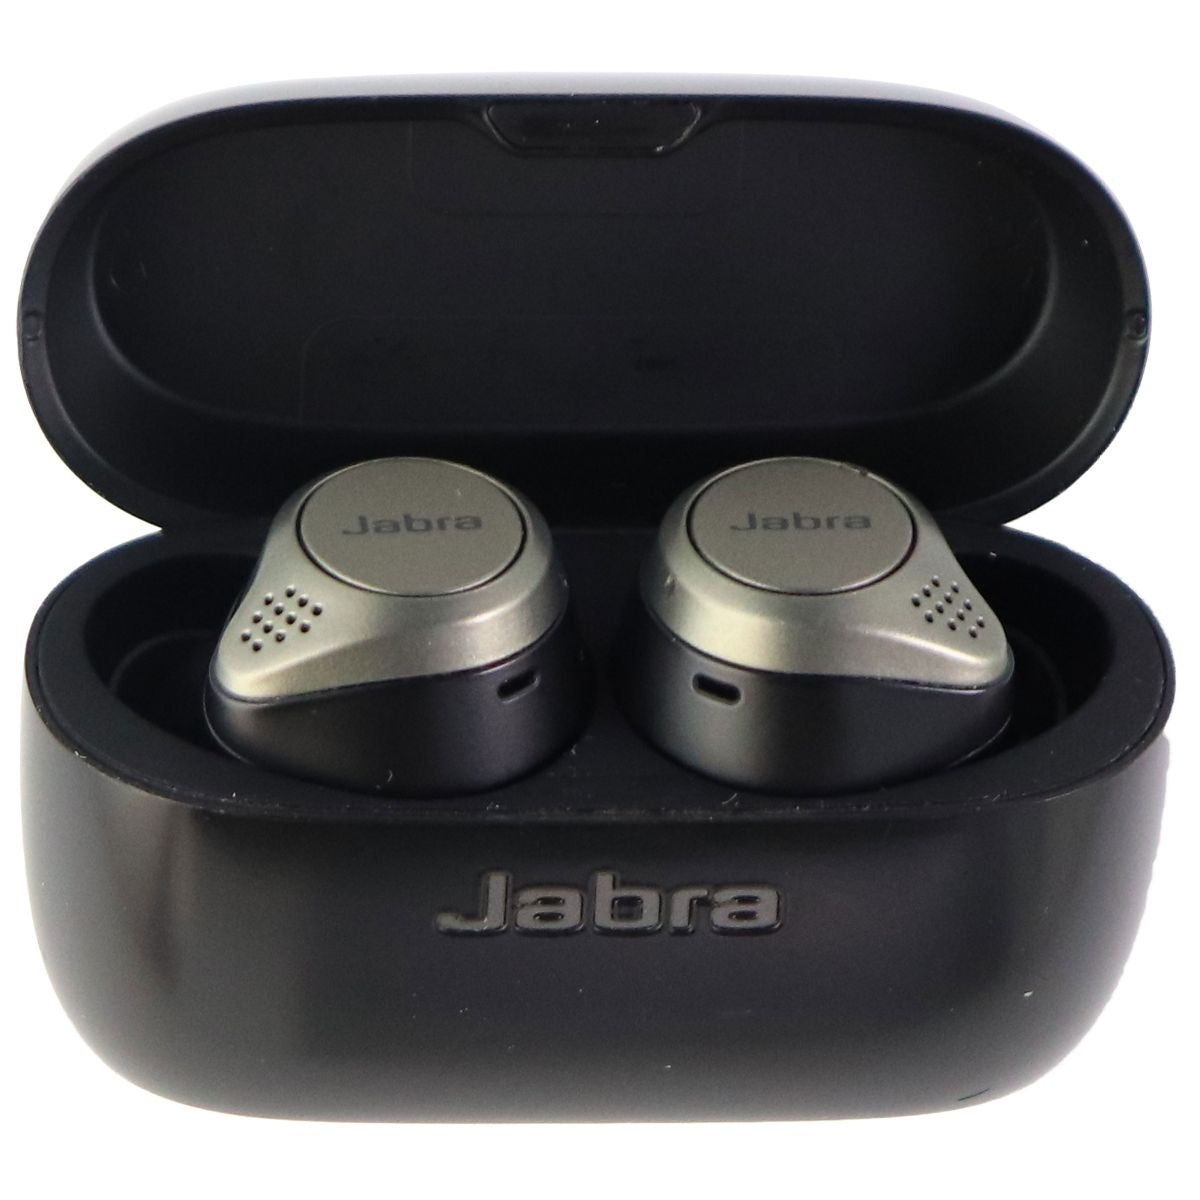 Jabra Elite 75T Titanium Black Wireless Earbuds - Silver/Black